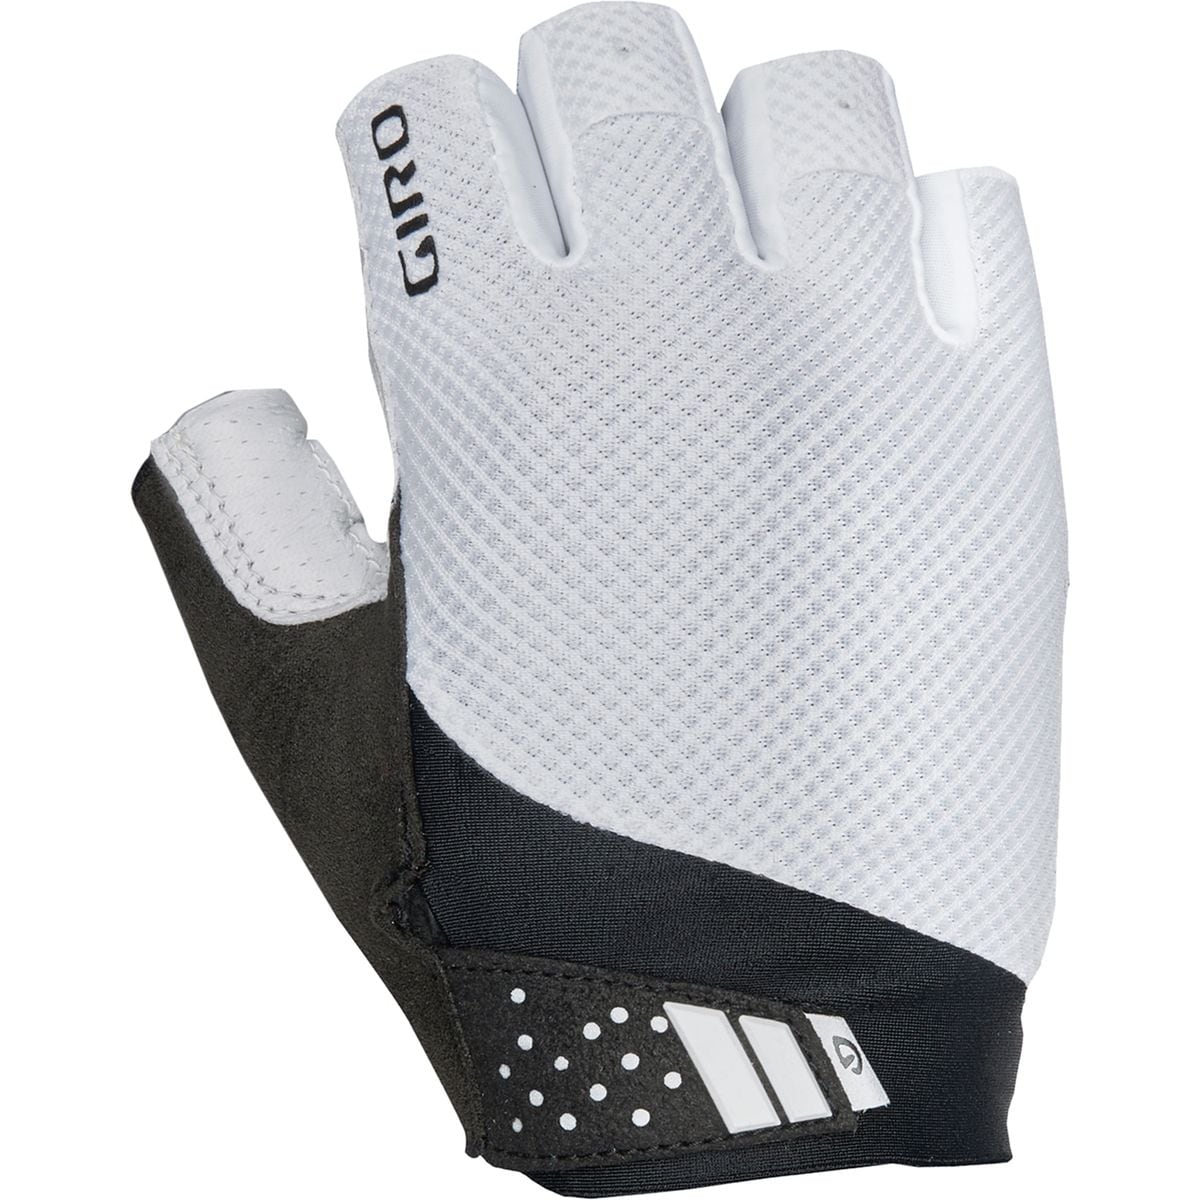 Giro Monaco II Gel Glove Men's